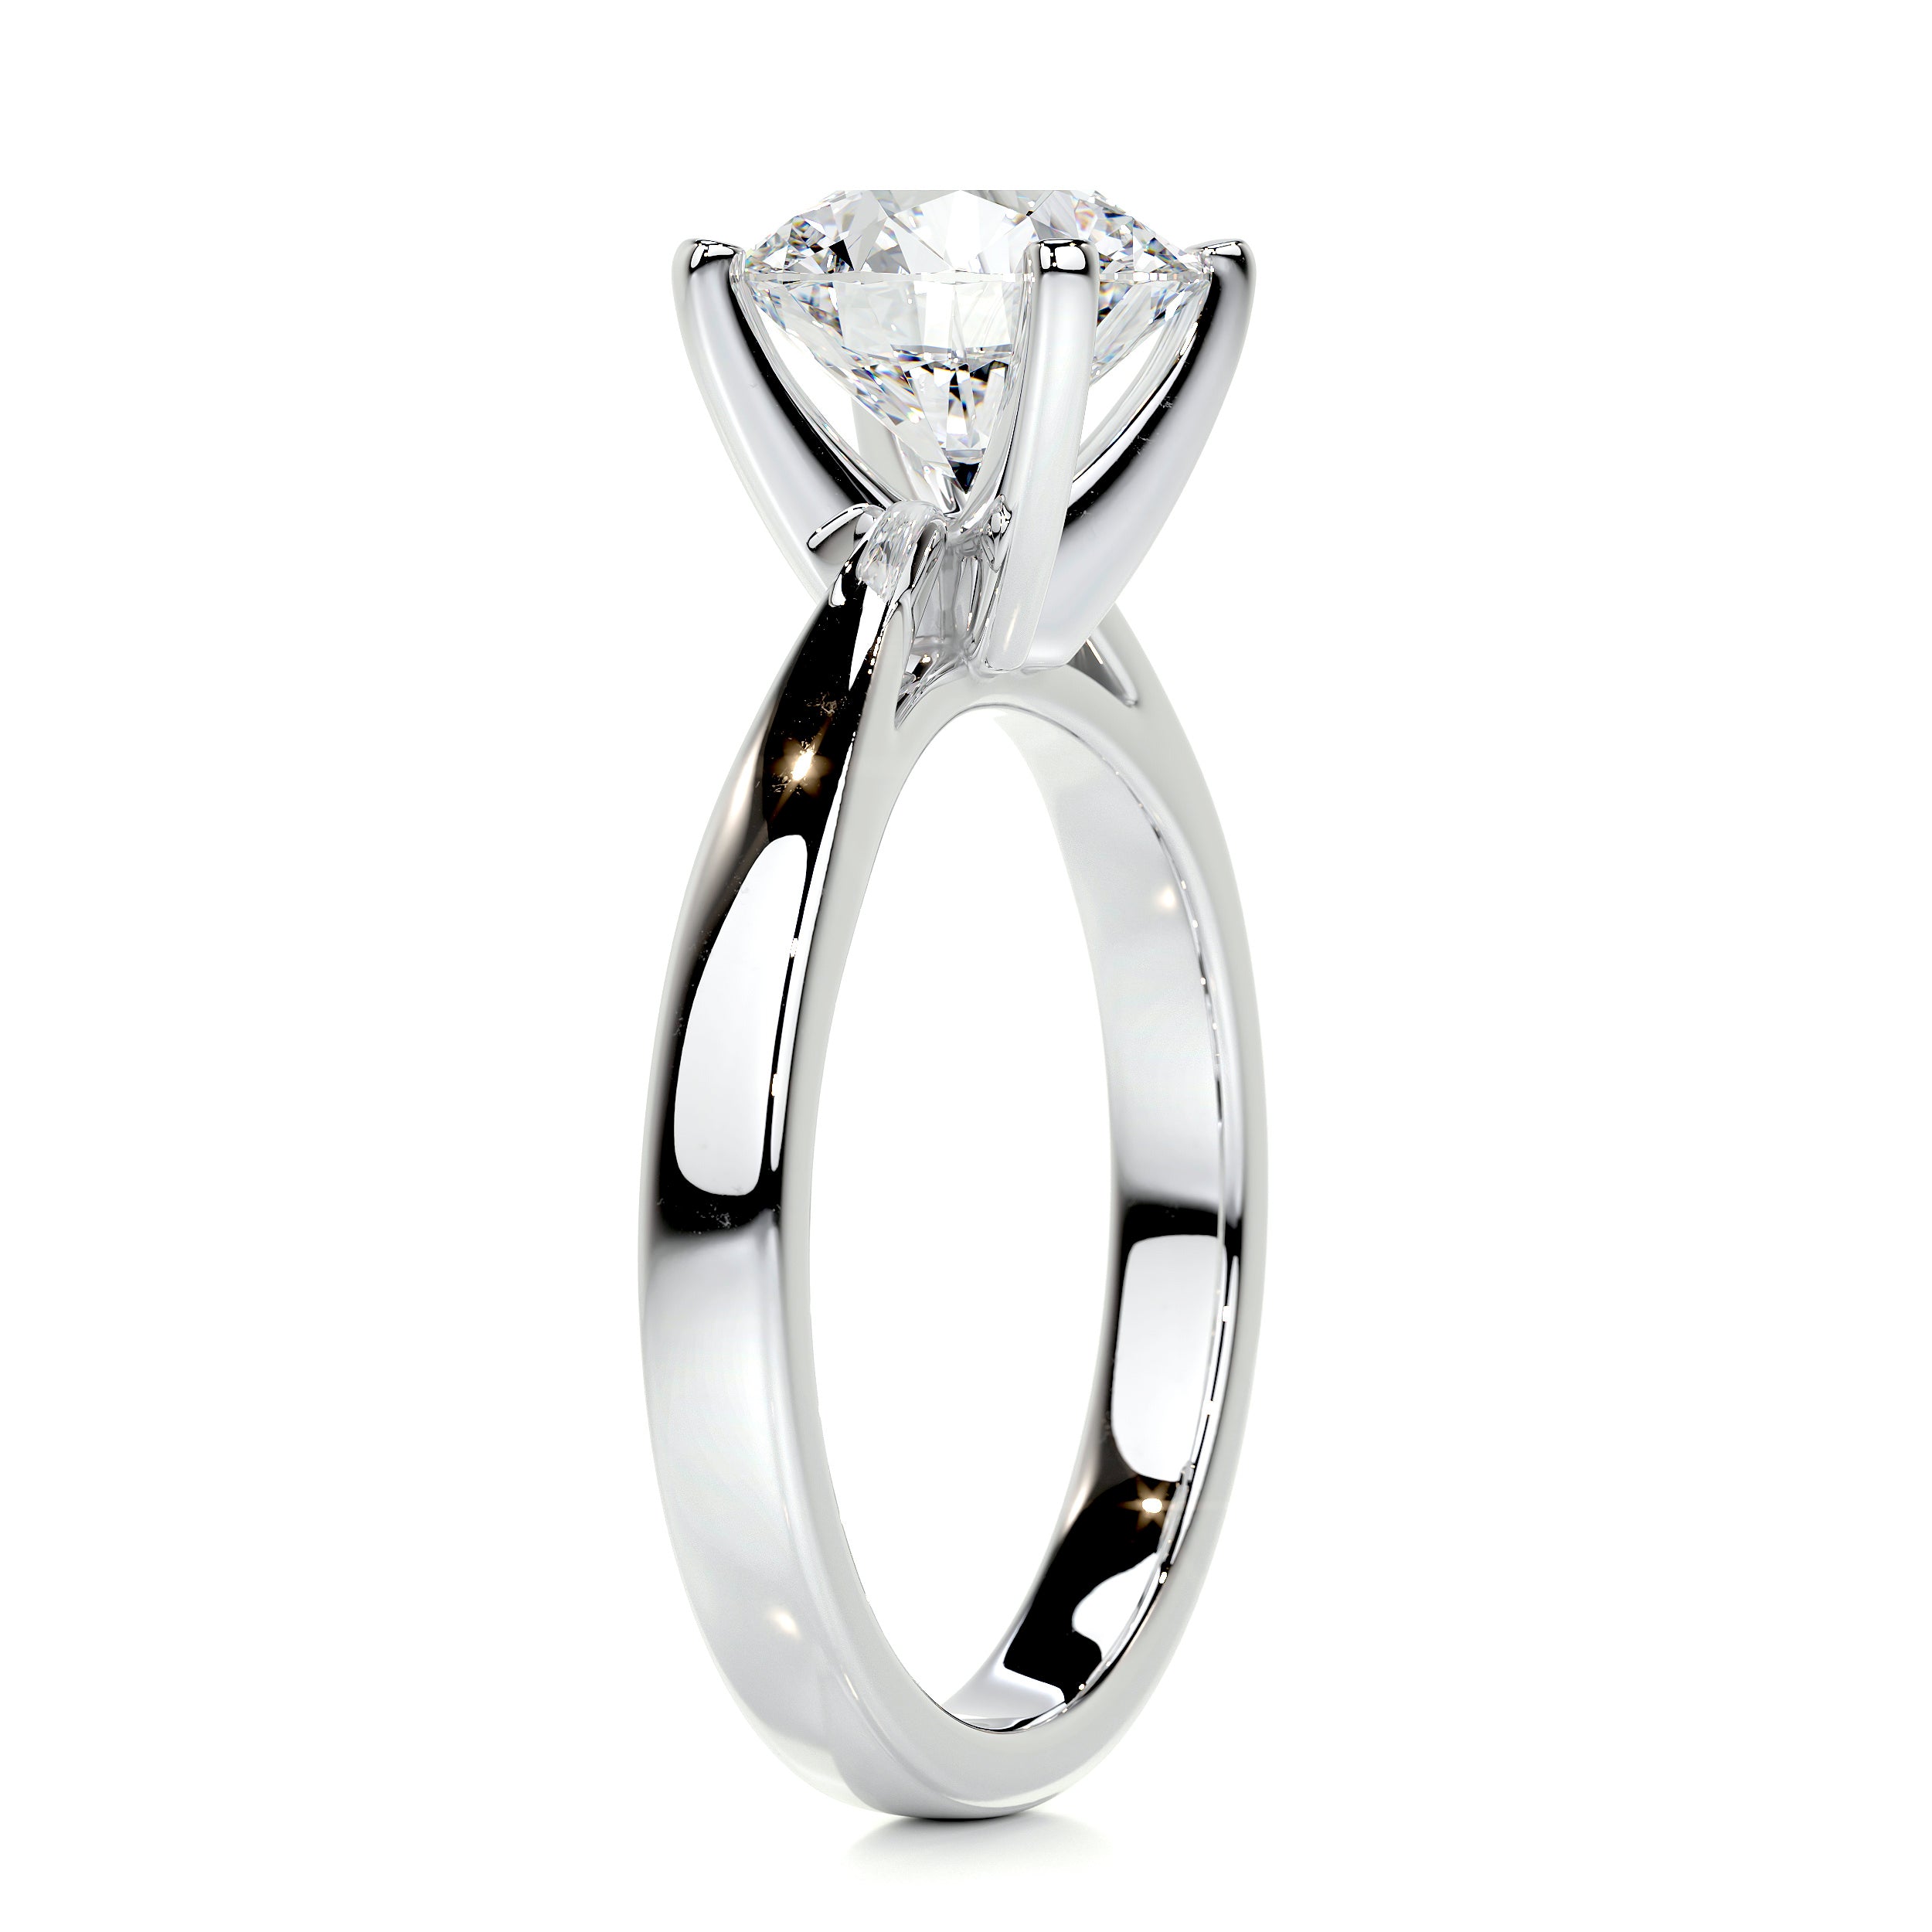 Diana Diamond Engagement Ring -14K White Gold